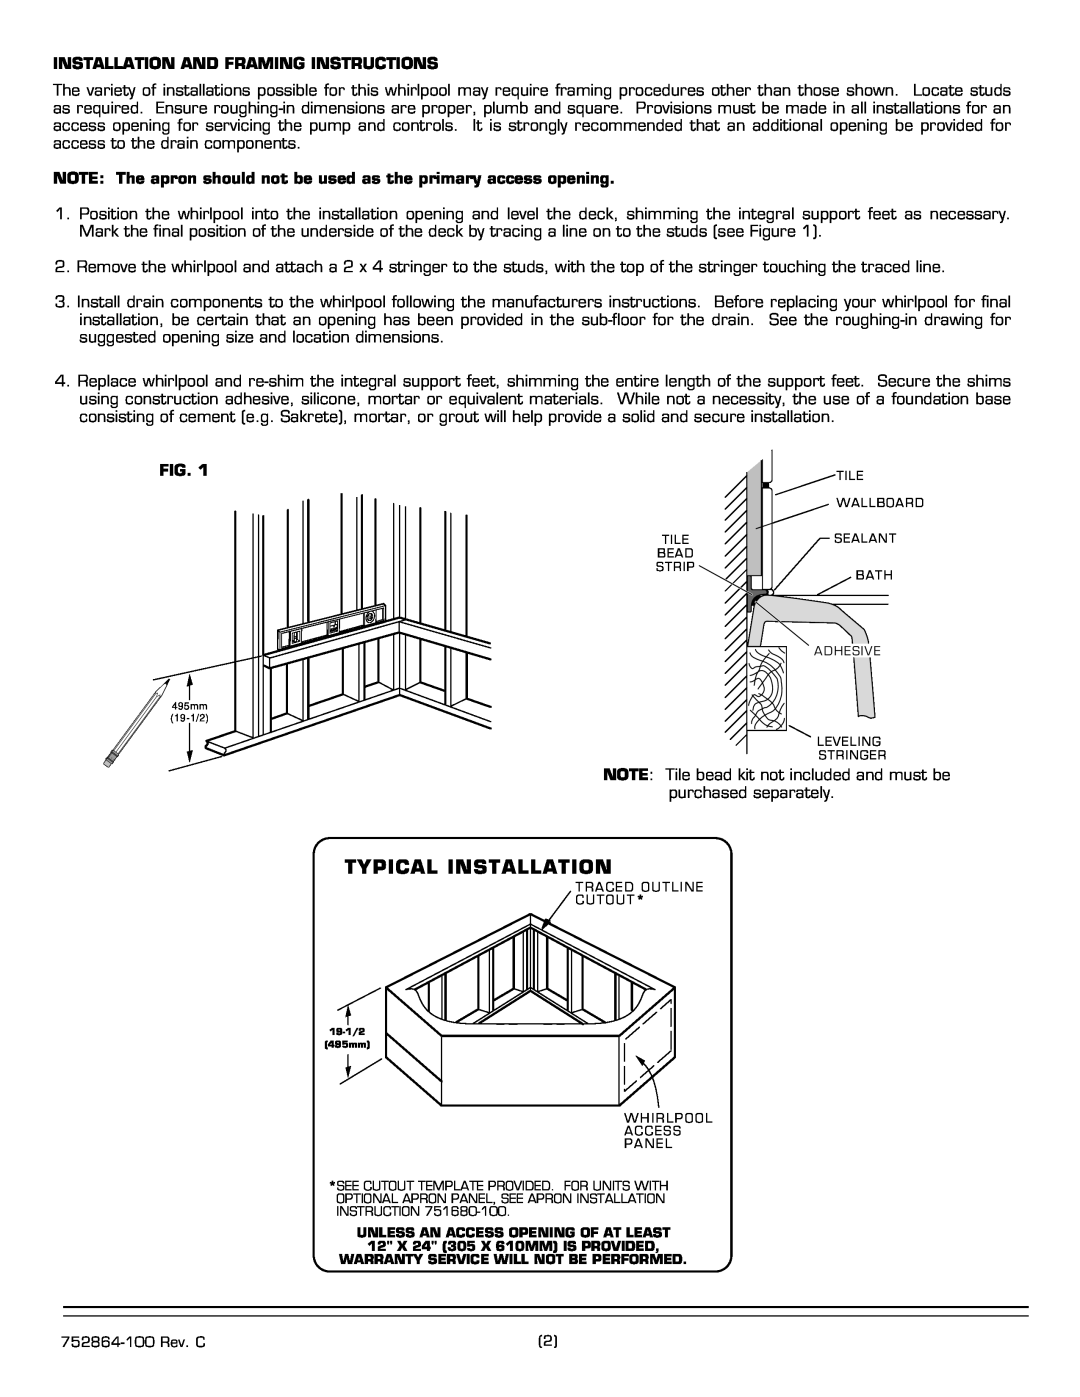 American Standard 6060E SERIES installation instructions Typical Installation, Installation And Framing Instructions 